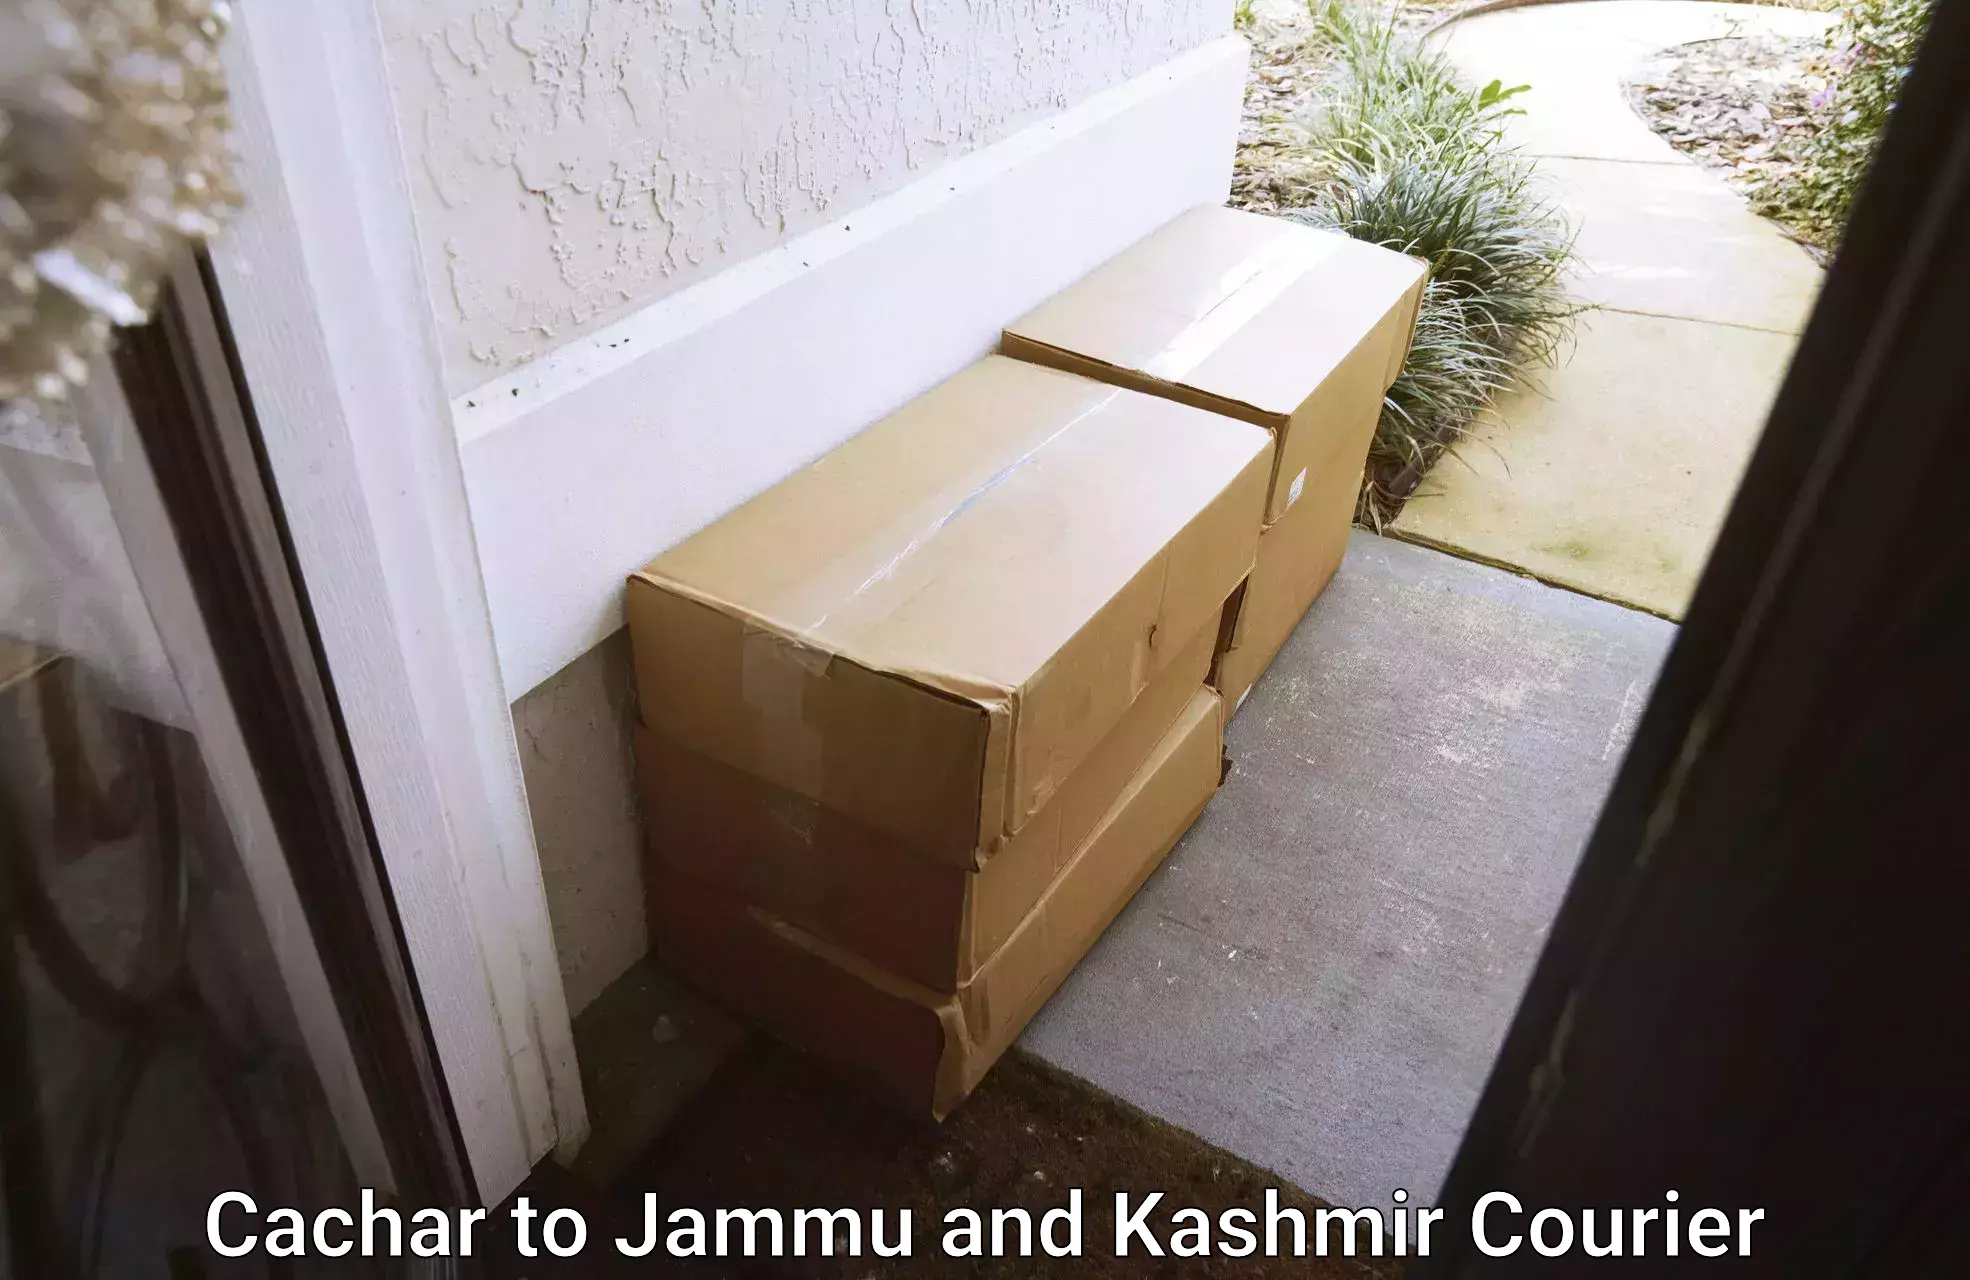 Smart logistics strategies Cachar to Jammu